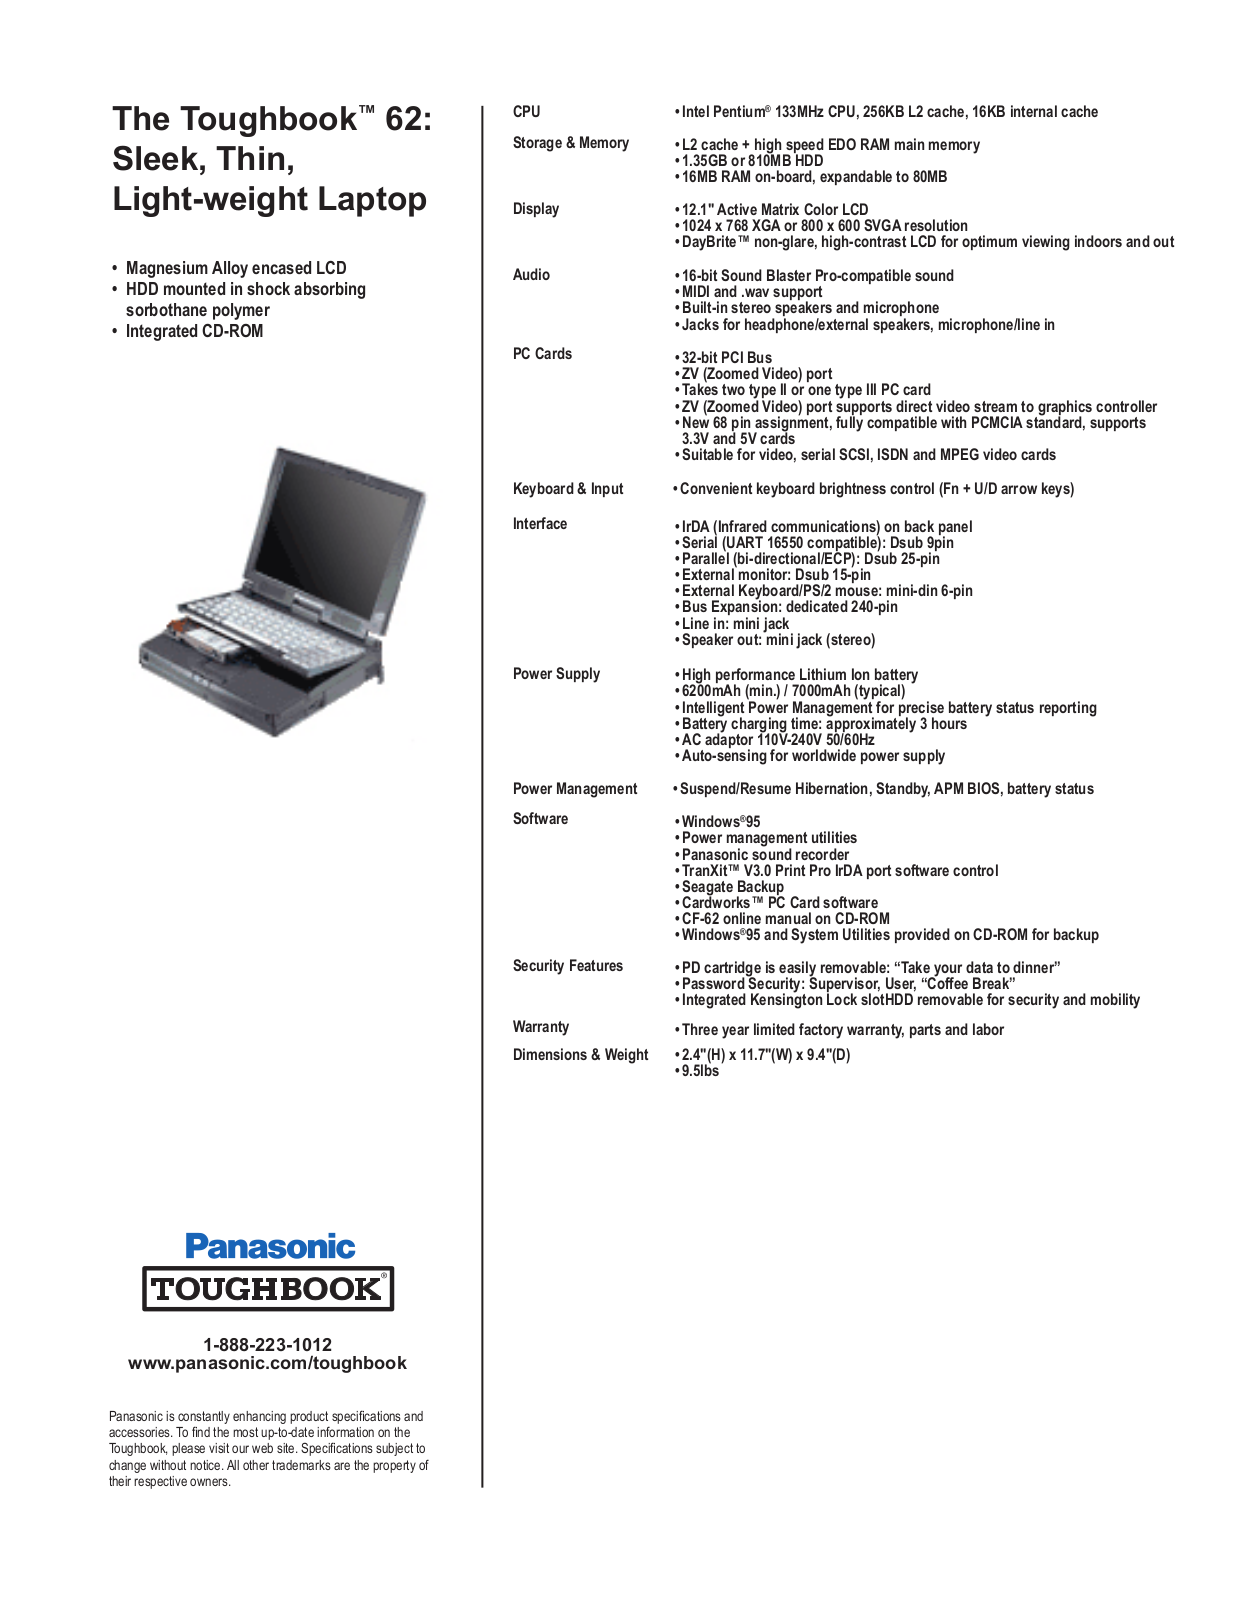 Panasonic Toughbook 62 User Manual